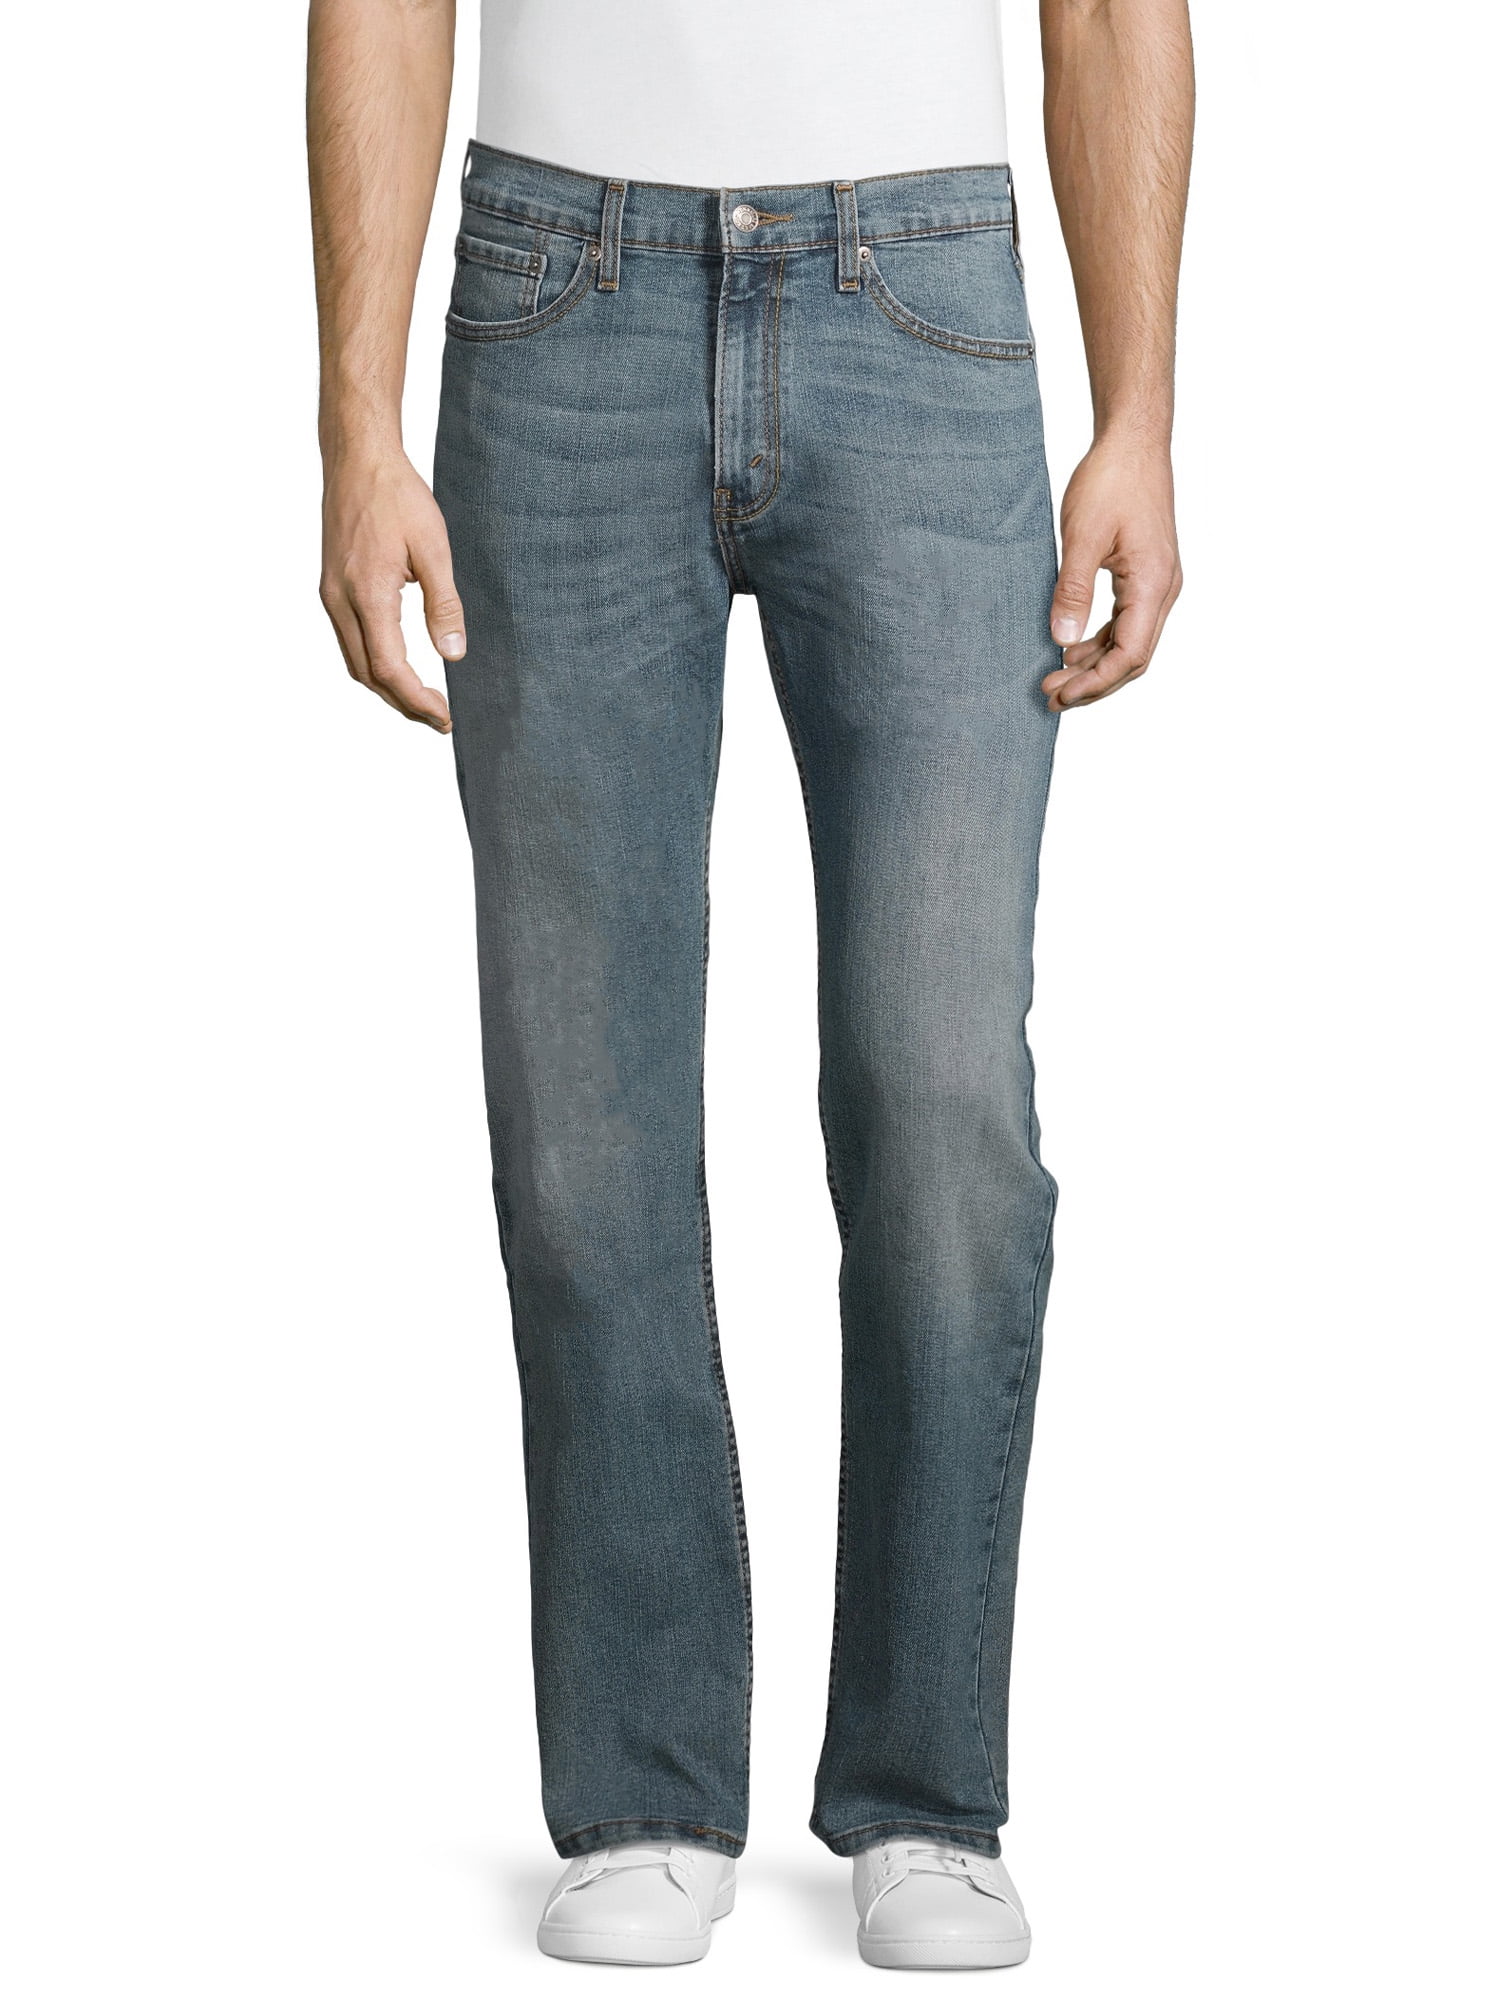 Signature by Levi Strauss & Co. Men's Regular Fit Jeans - Walmart.com